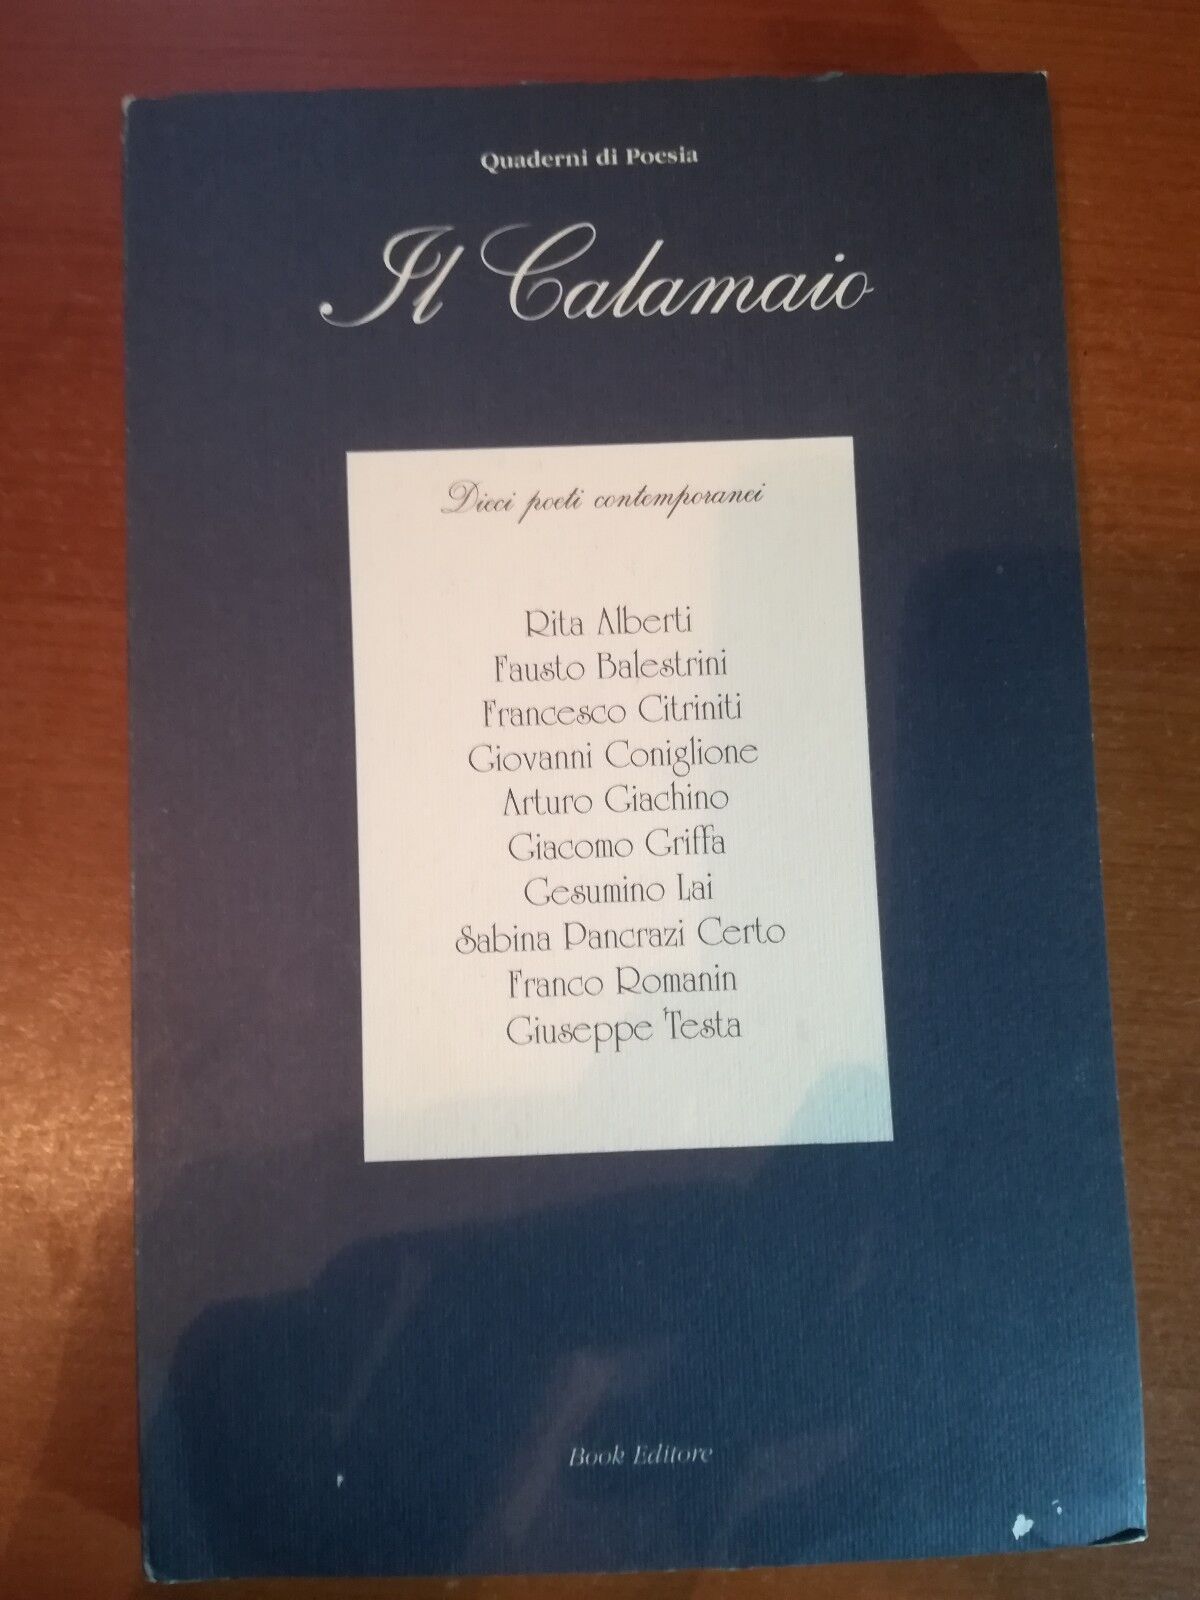 Il calamaio - AA.VV. - Book - 1990  - M